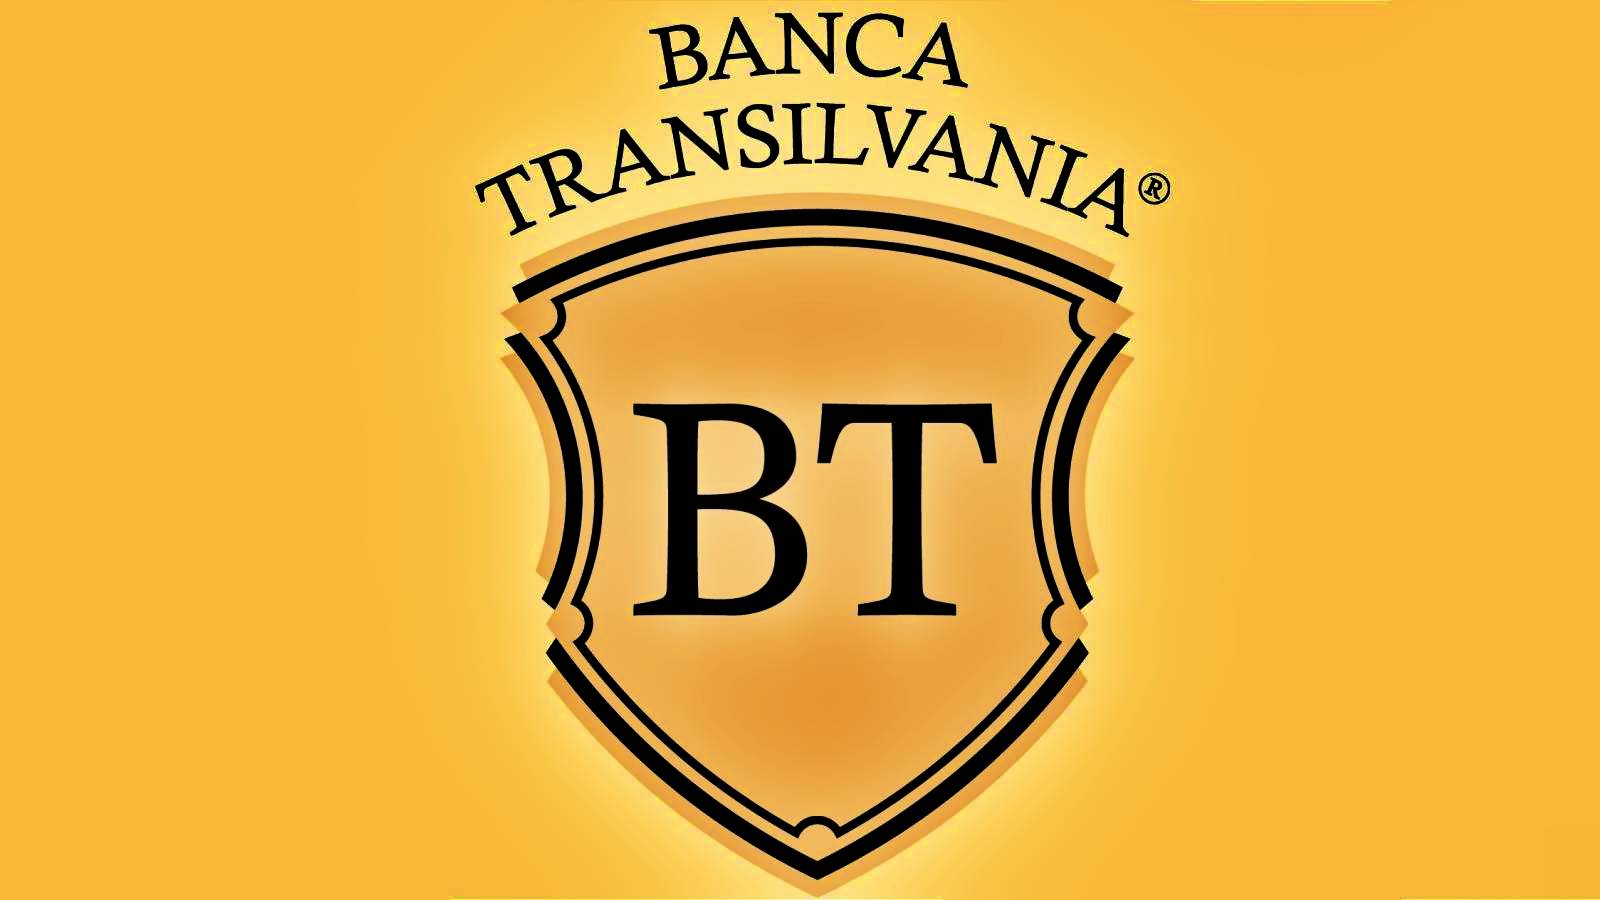 BANCA Transilvania Serious ALERT se dirige a los clientes rumanos